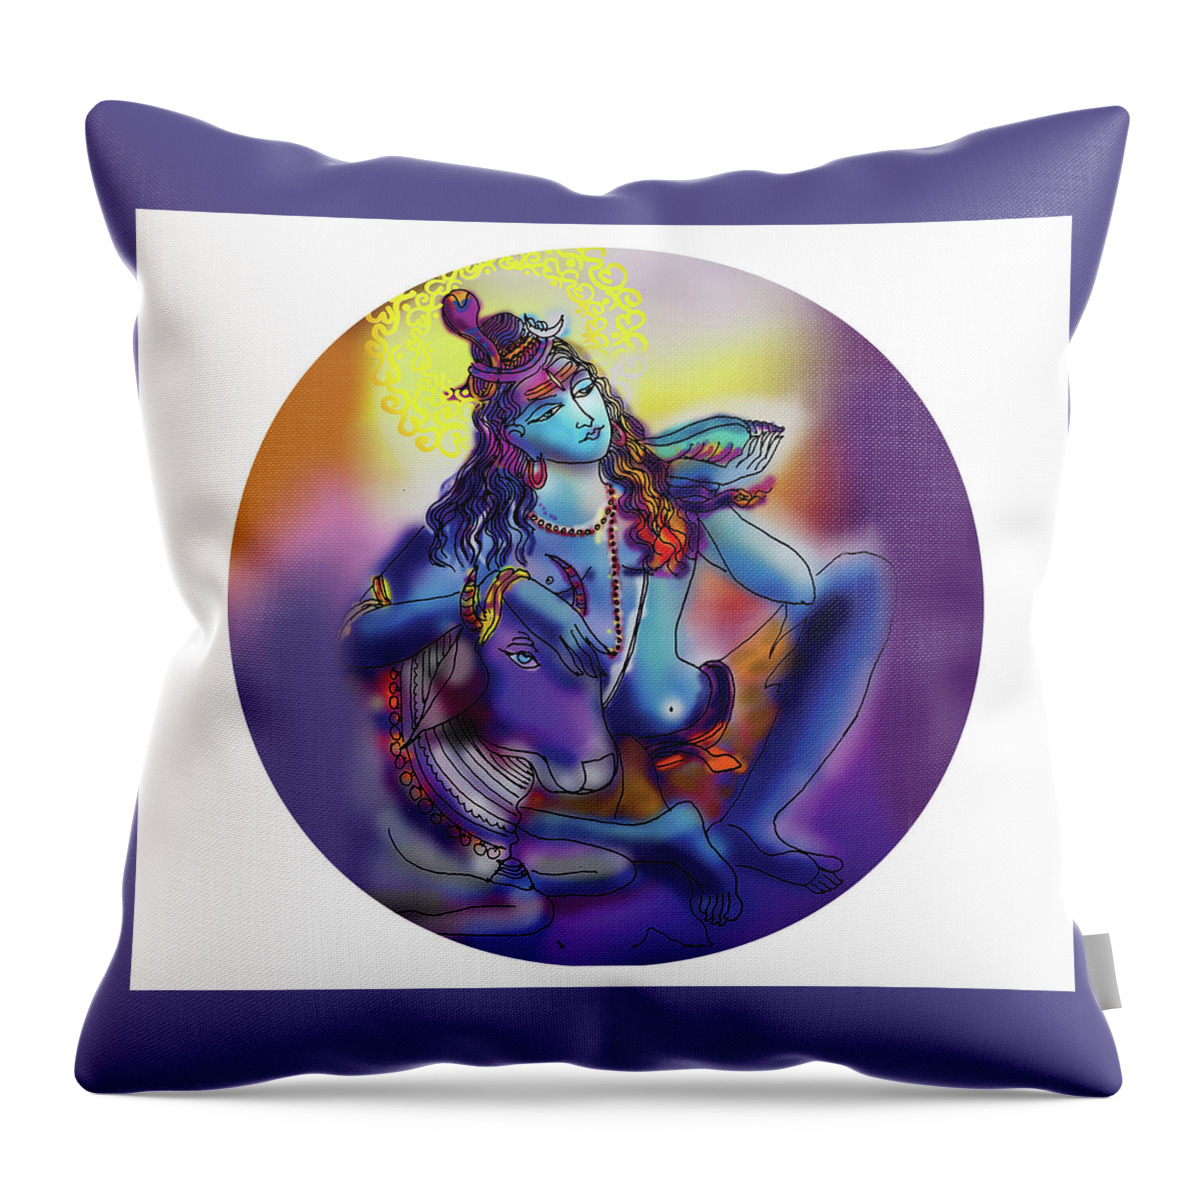 Shiva Throw Pillow featuring the painting Neelakanth Shiva by Guruji Aruneshvar Paris Art Curator Katrin Suter